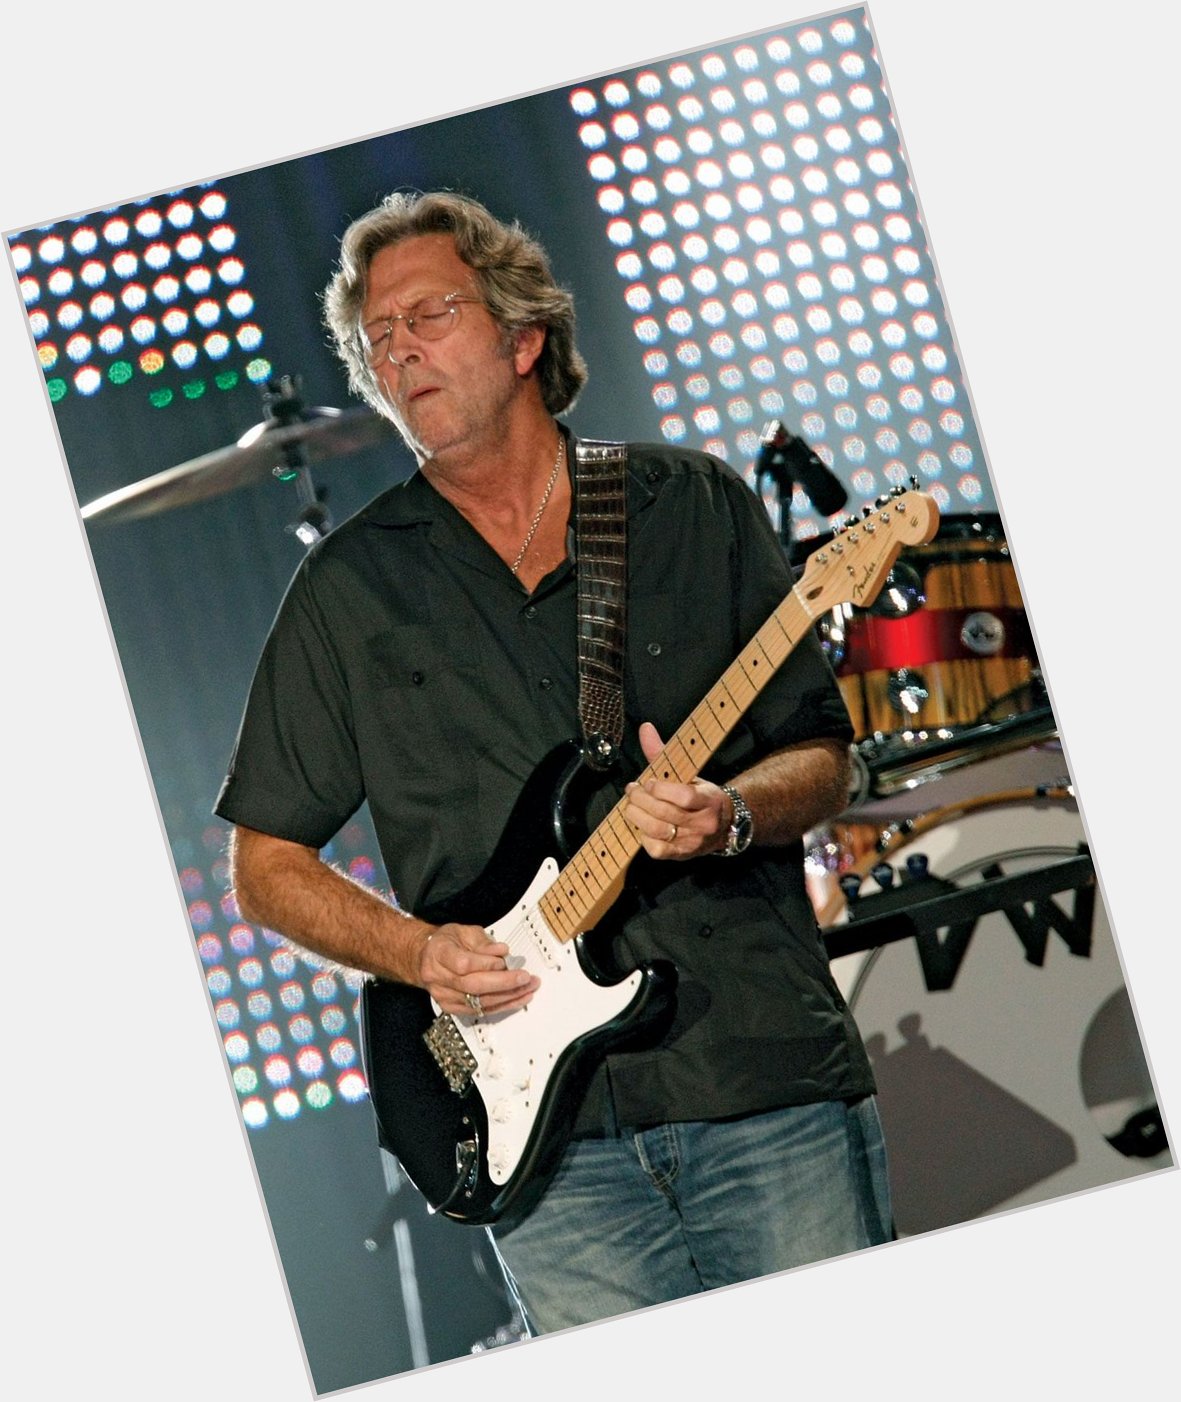 Happy 78th Birthday to
Eric Clapton! 